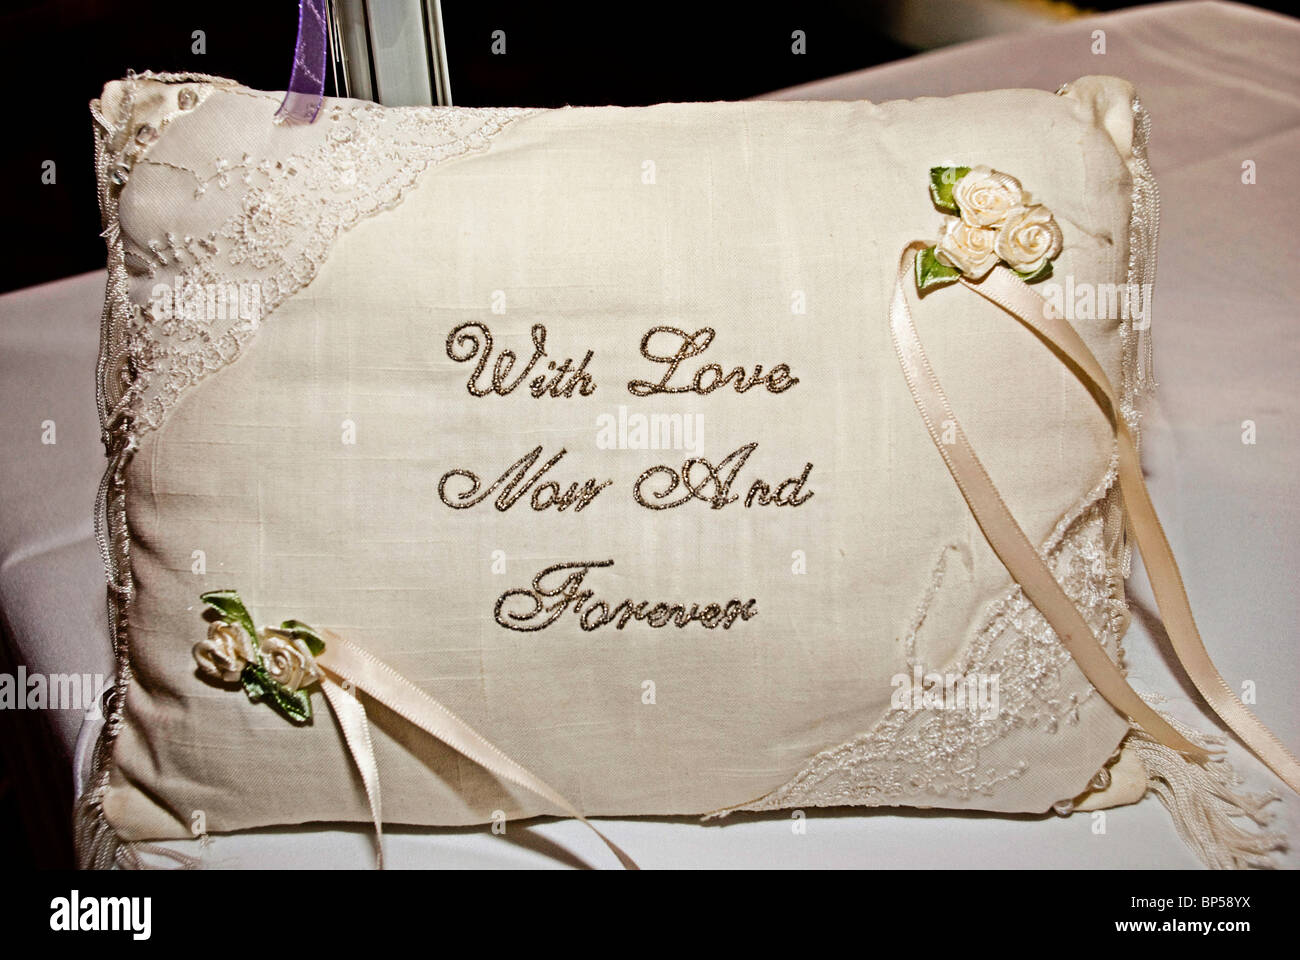 Wedding Ring Pillow Box, Personalised Ring Bearer / Page Boy, Flower Girl  Item | eBay